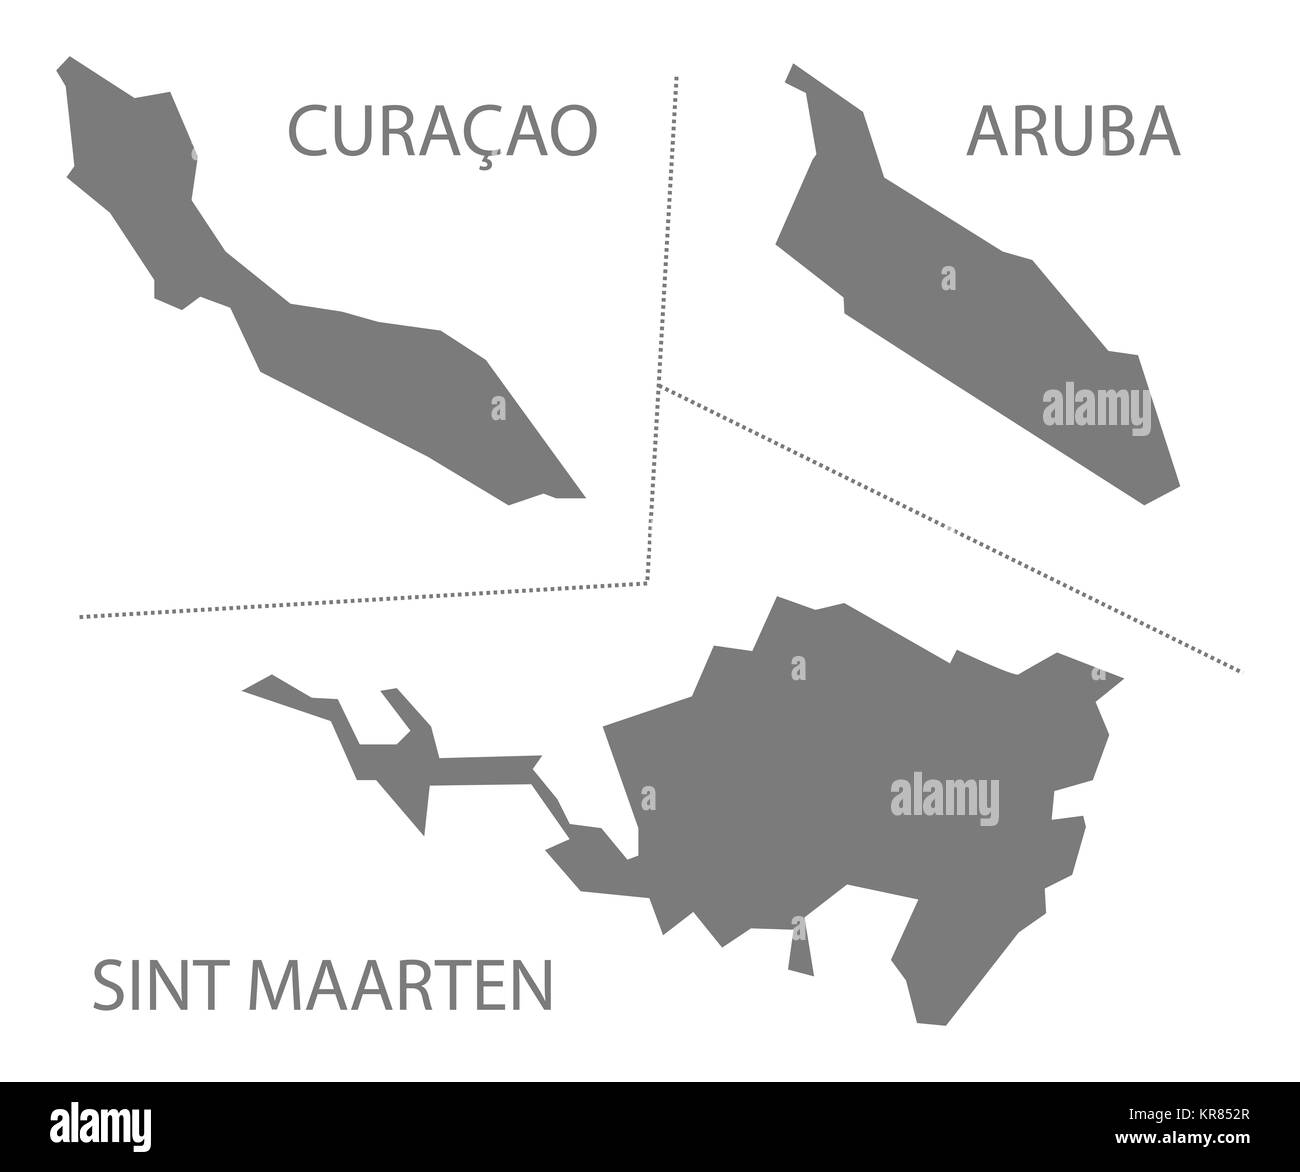 Curacao - Aruba - Sint Maarten Islands Netherlands Map grey Stock Photo